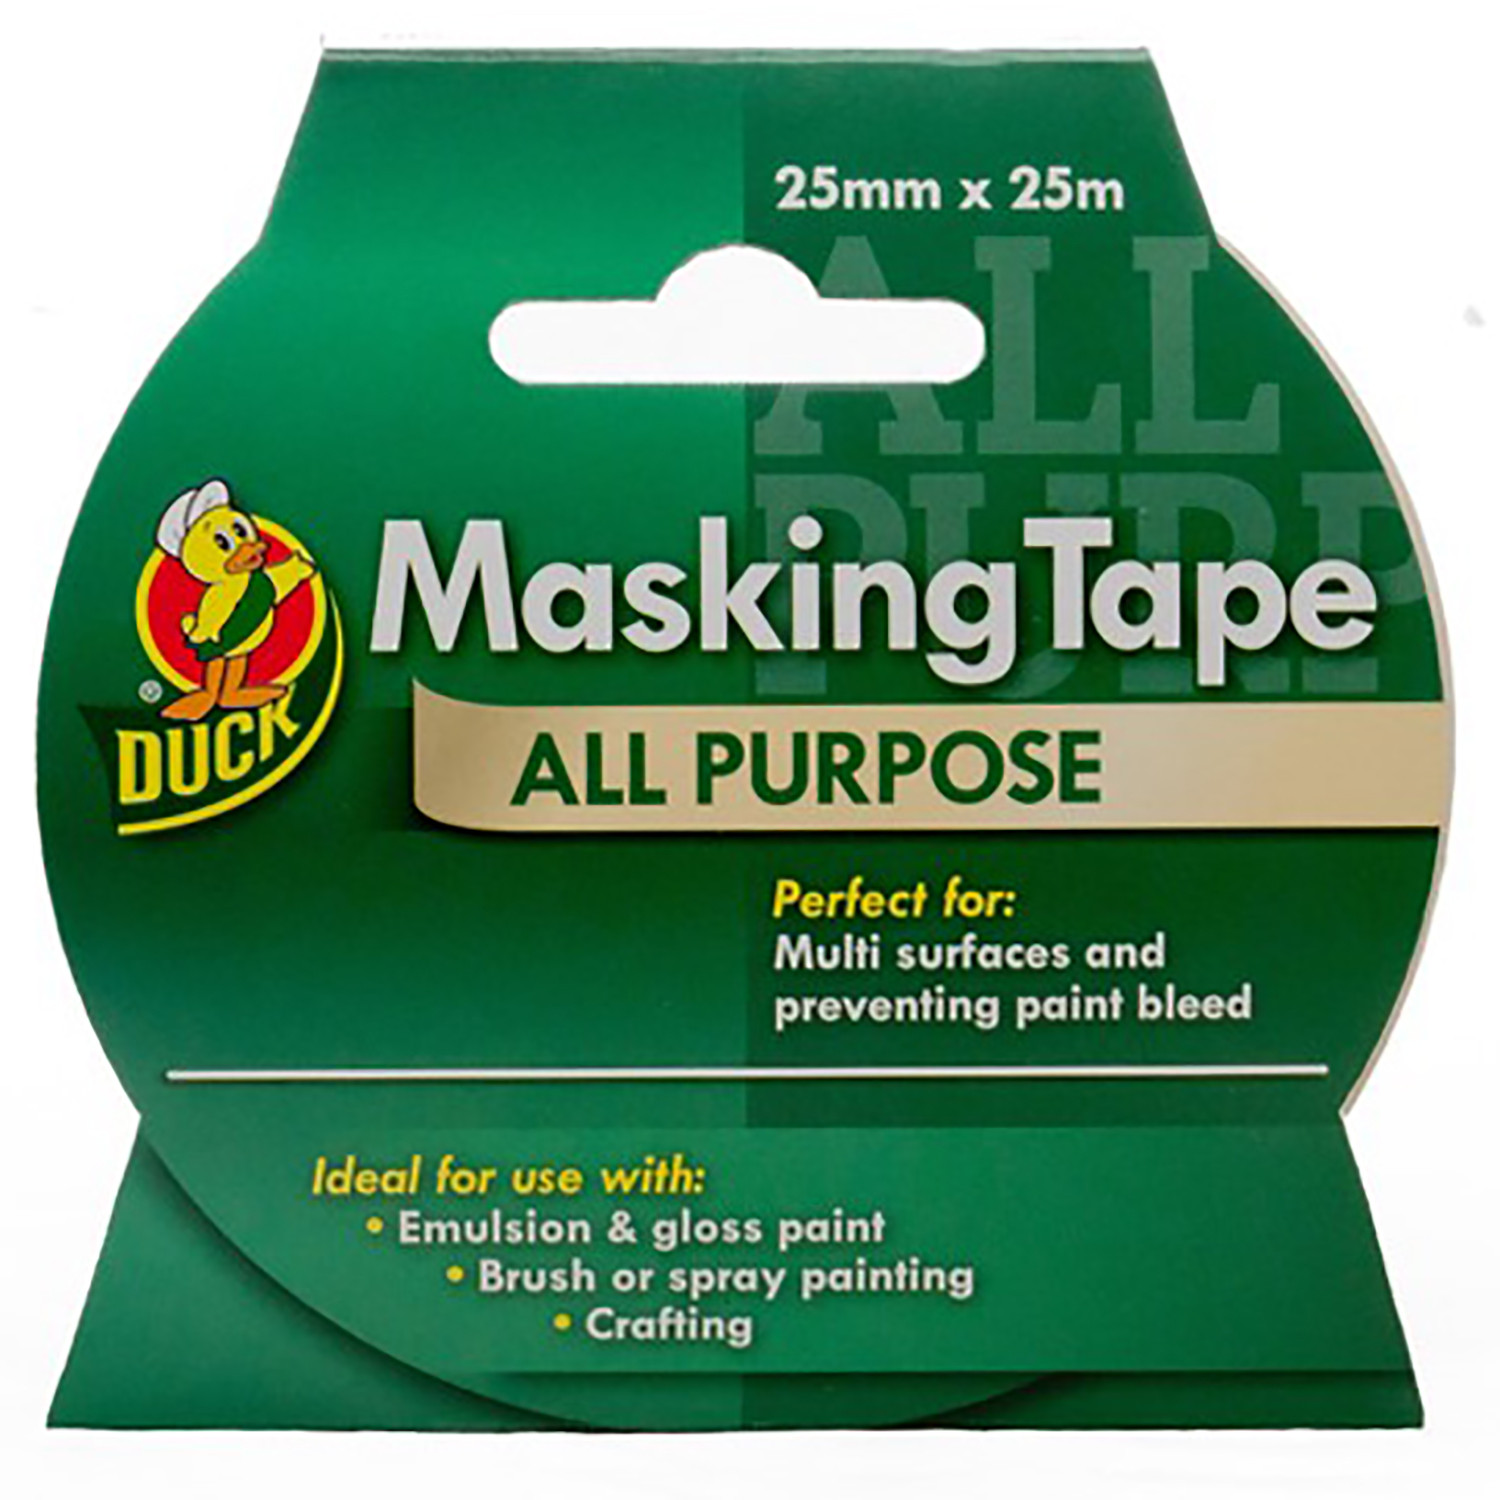 Duck Tape All Purpose Masking Tape Image 1